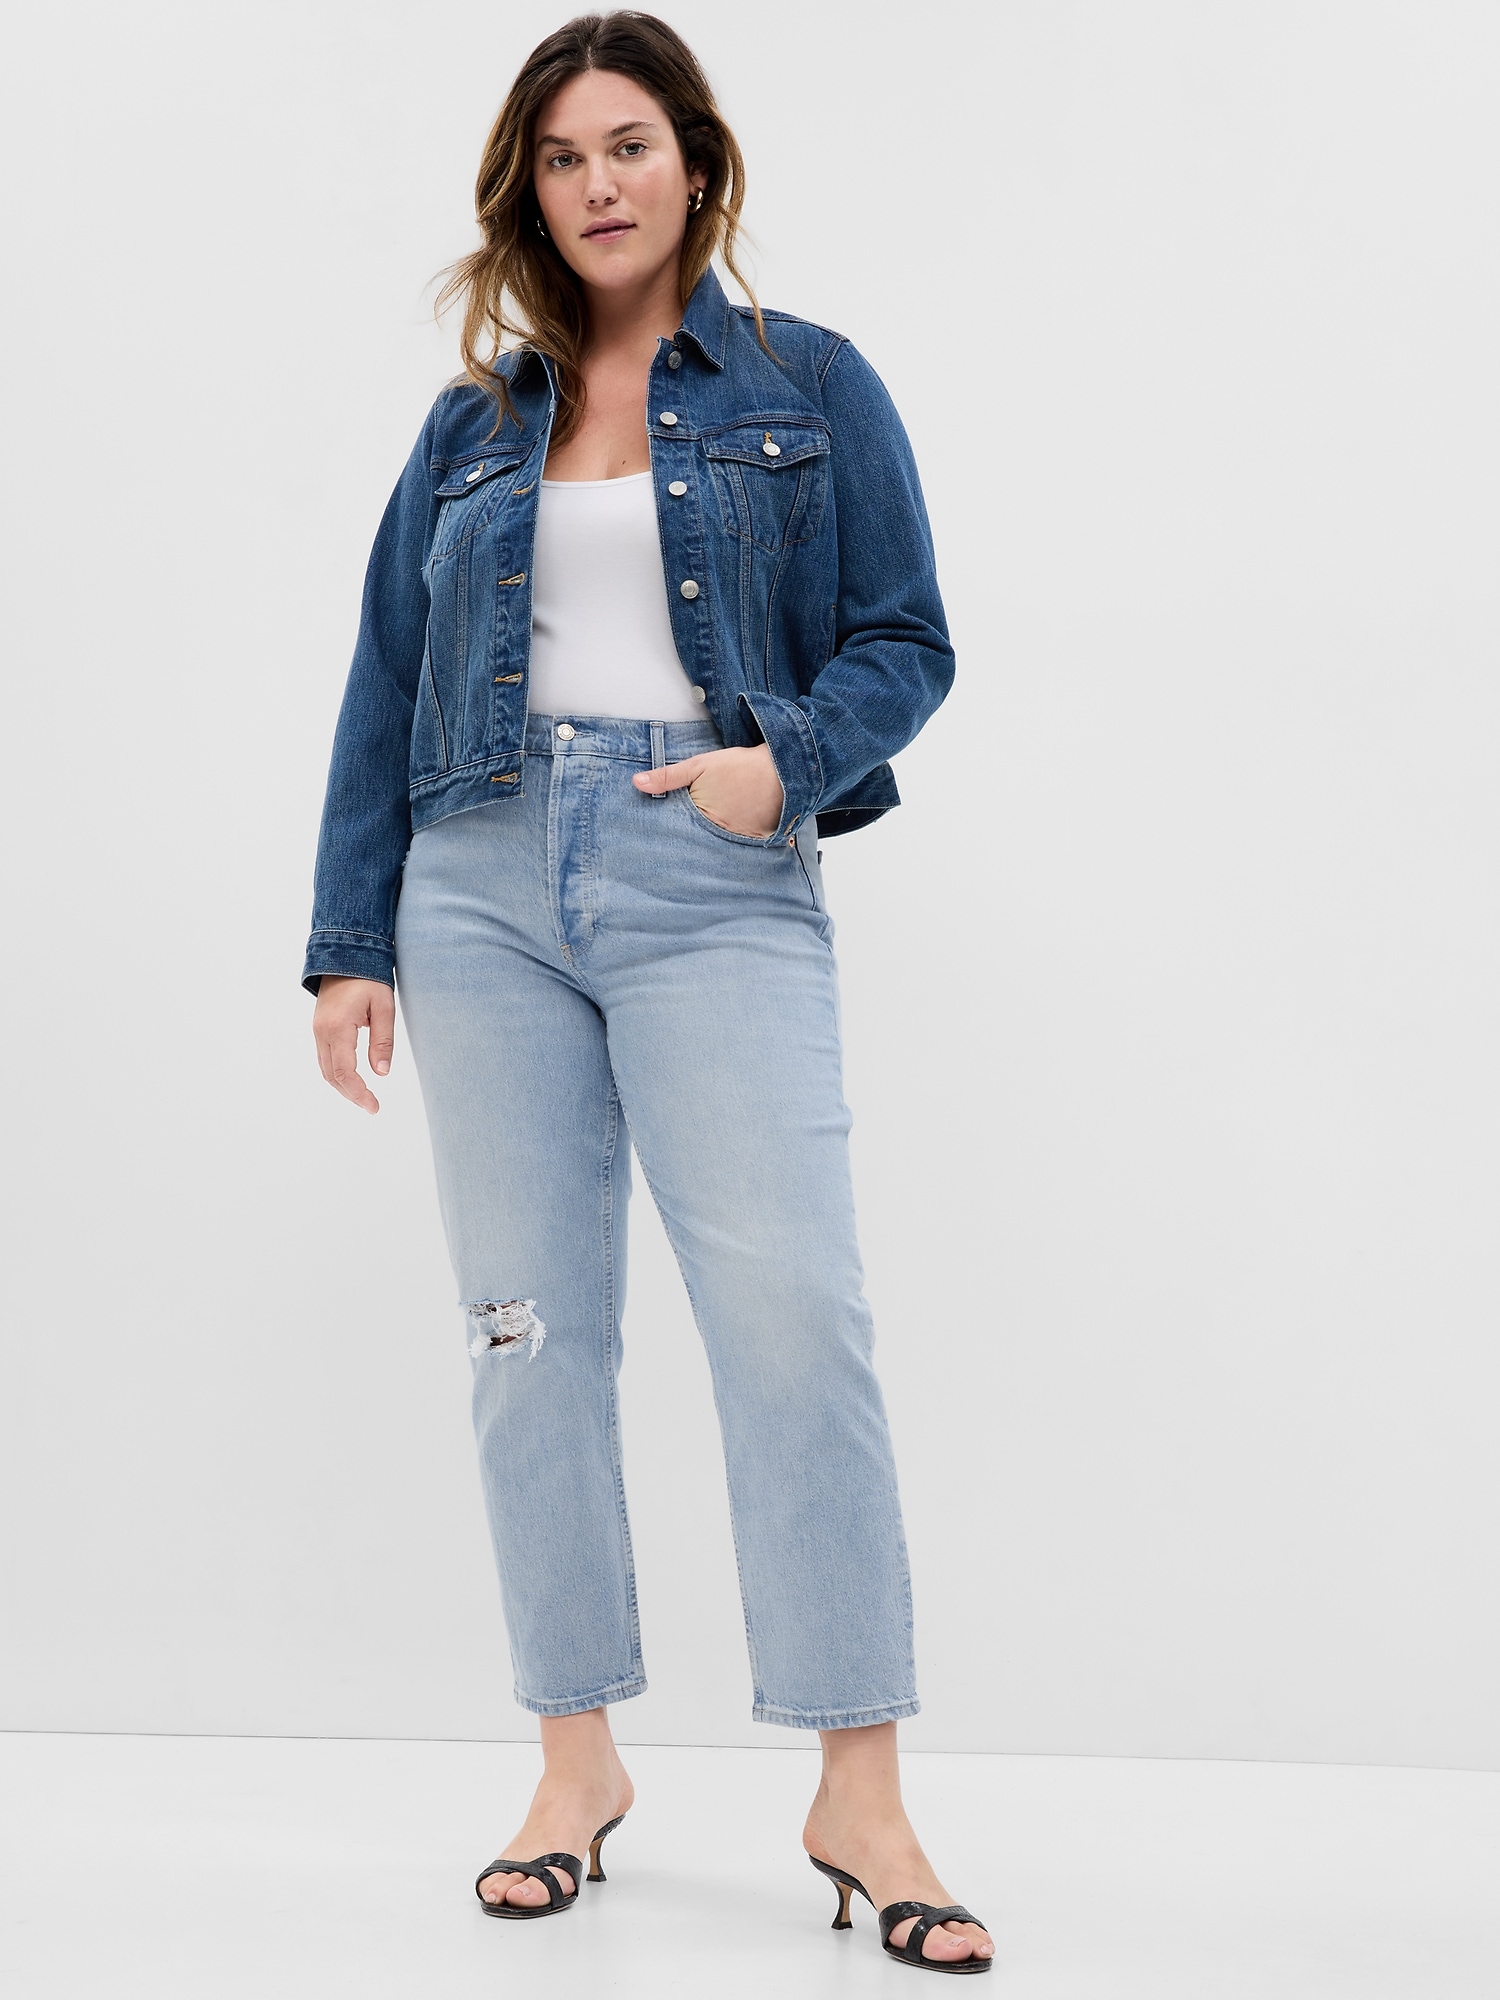 Gap Women's High Rise Cheeky Straight Jeans